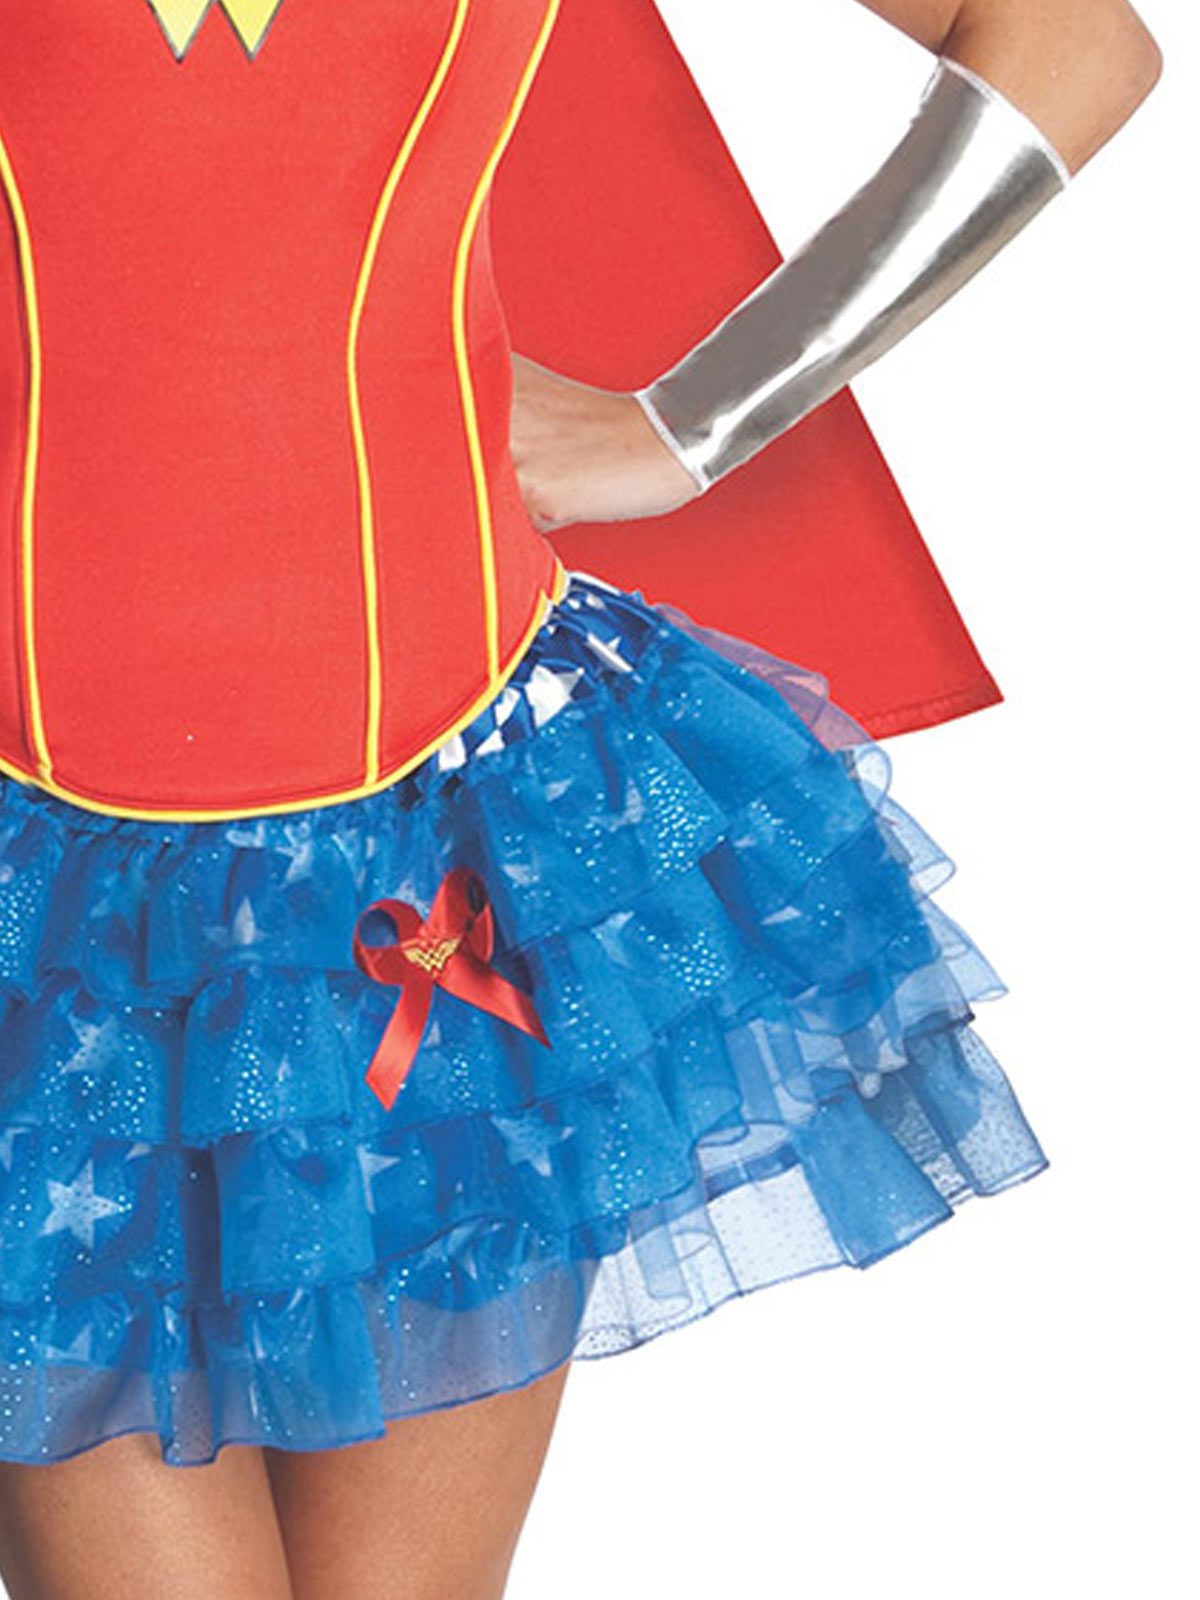 Sexy Wonder Woman Corset Costume